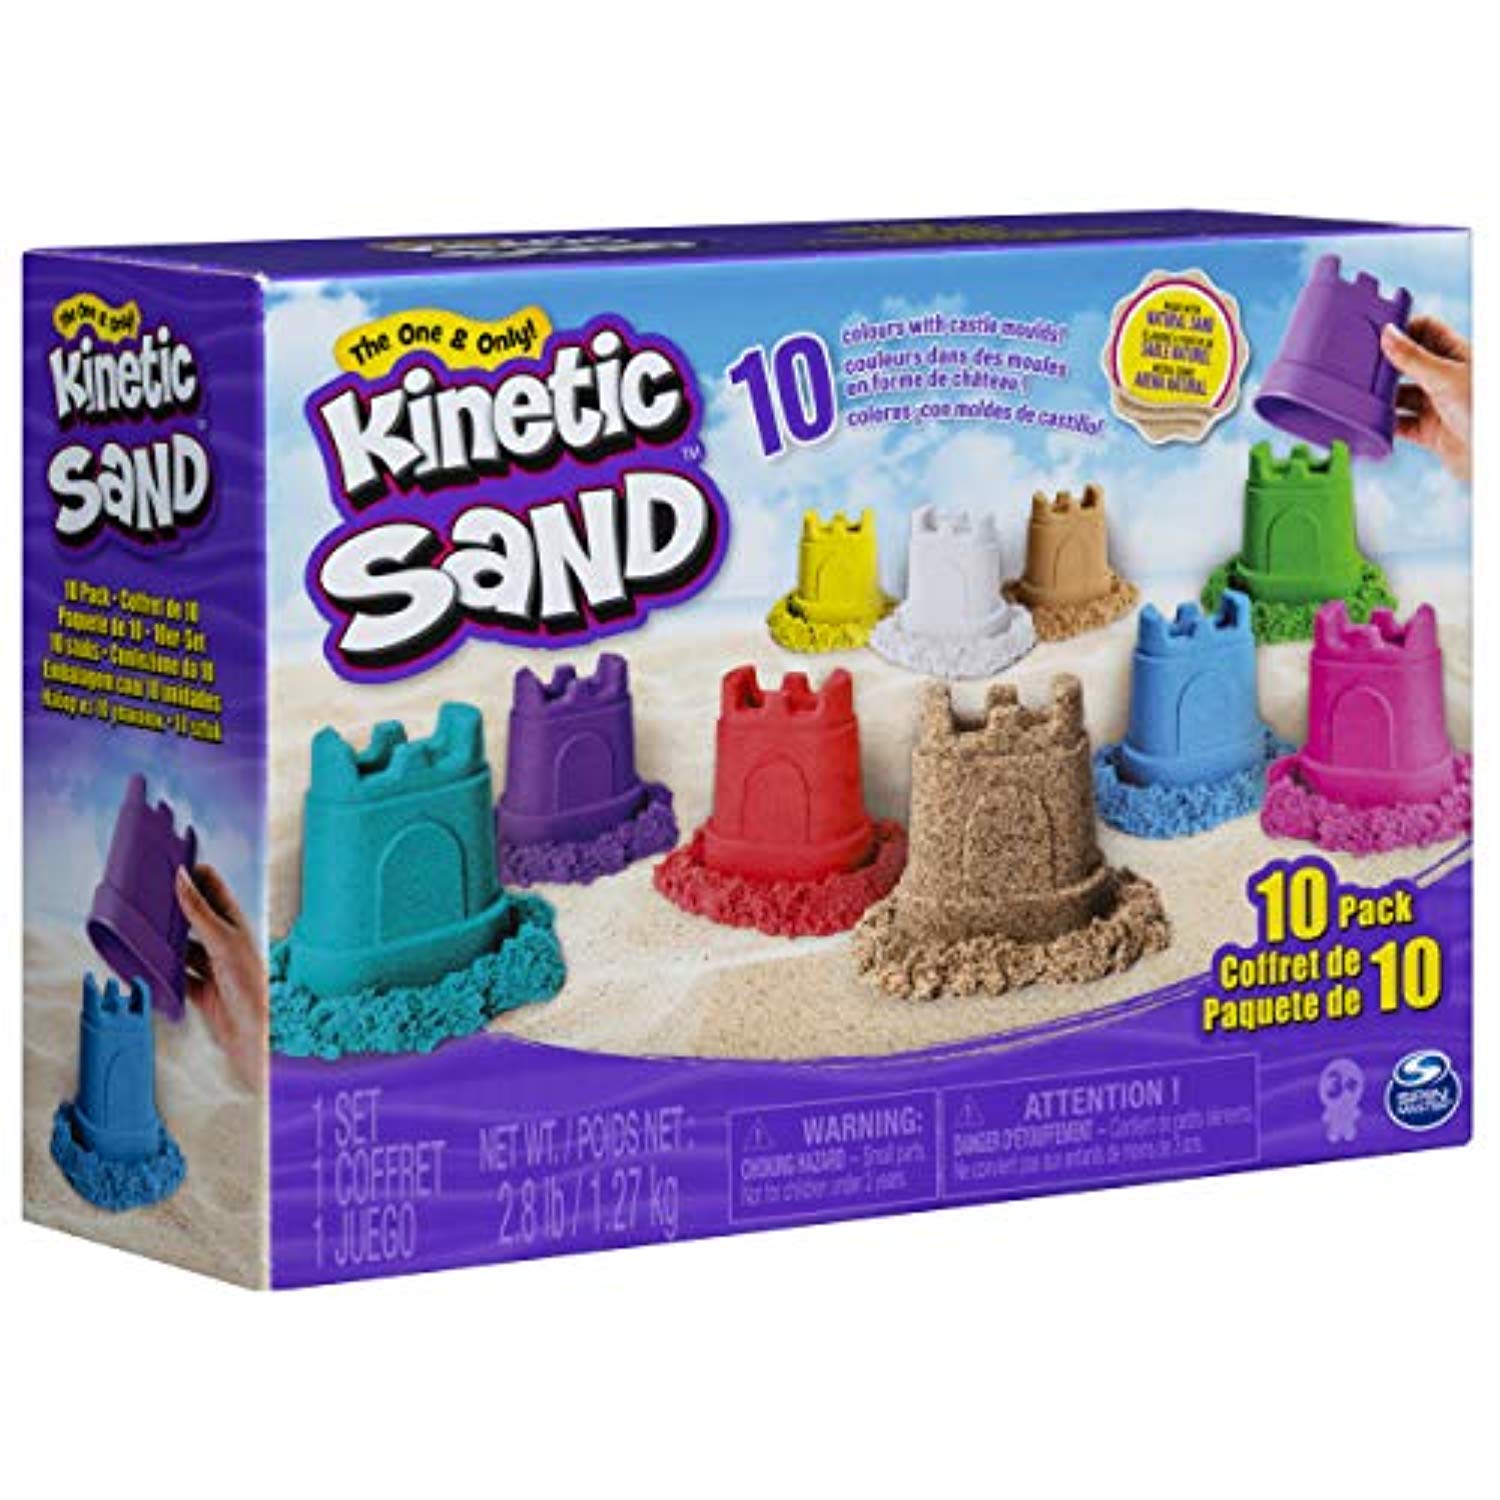 kinetic sand tower